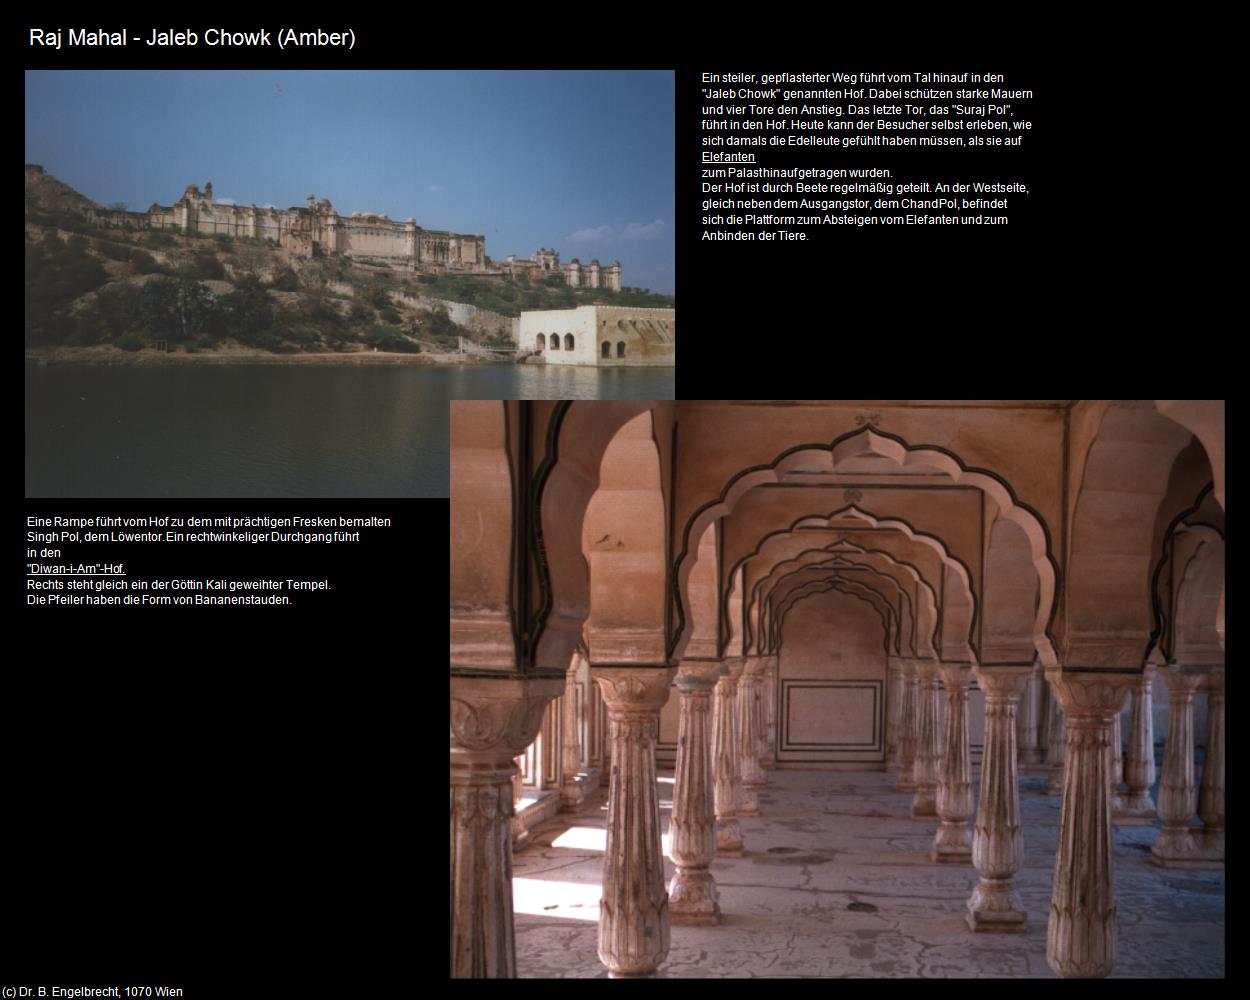 Raj Mahal - Jaleb Chowk (Amer bei Jaipur) in Rajasthan - das Land der Könige(c)B.Engelbrecht